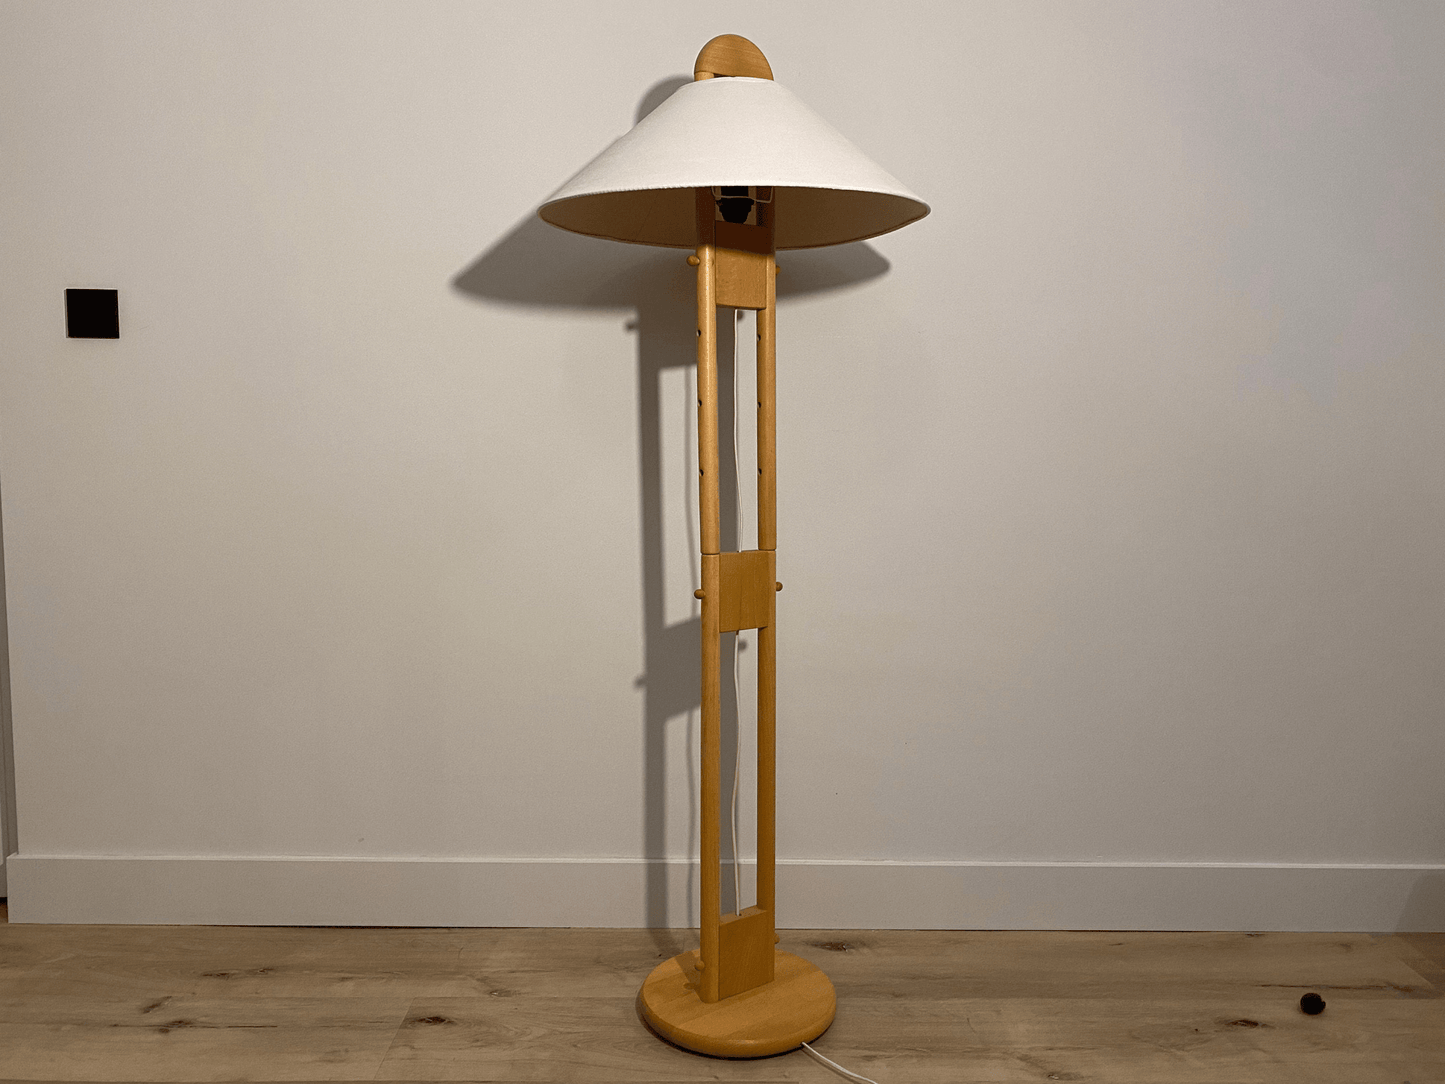 60s Danish Vintage Floor lamp from +LYS | Mid Century Modern Lighting OAK Wood Floor Lamp | Scandinavian Retro Design Floor Lamp - FancyVintage.nl -